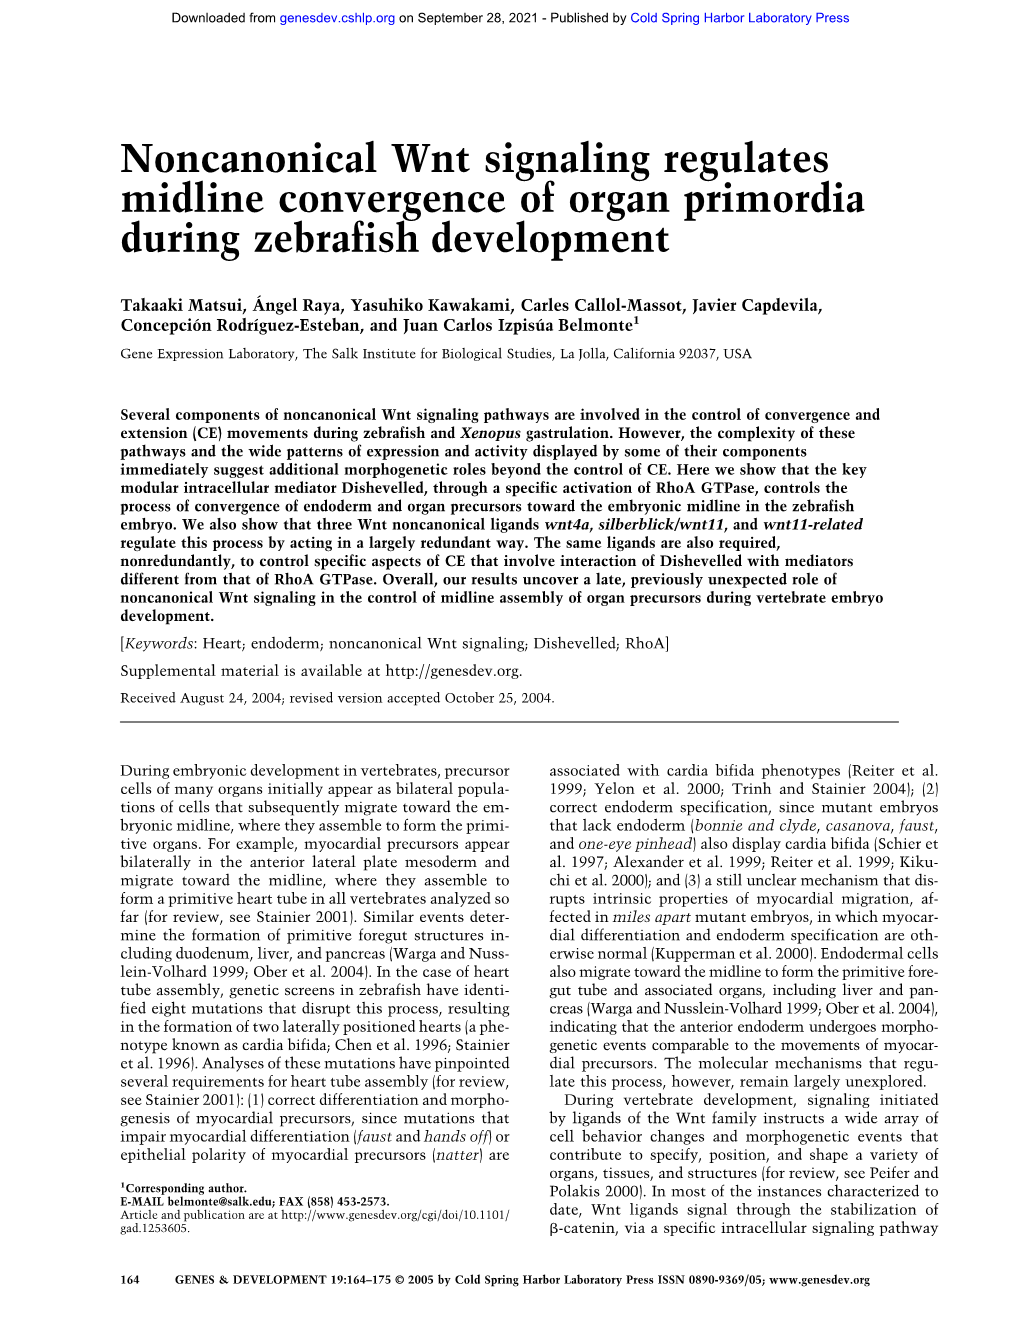 Noncanonical Wnt Signaling Regulates Midline Convergence of Organ Primordia During Zebrafish Development